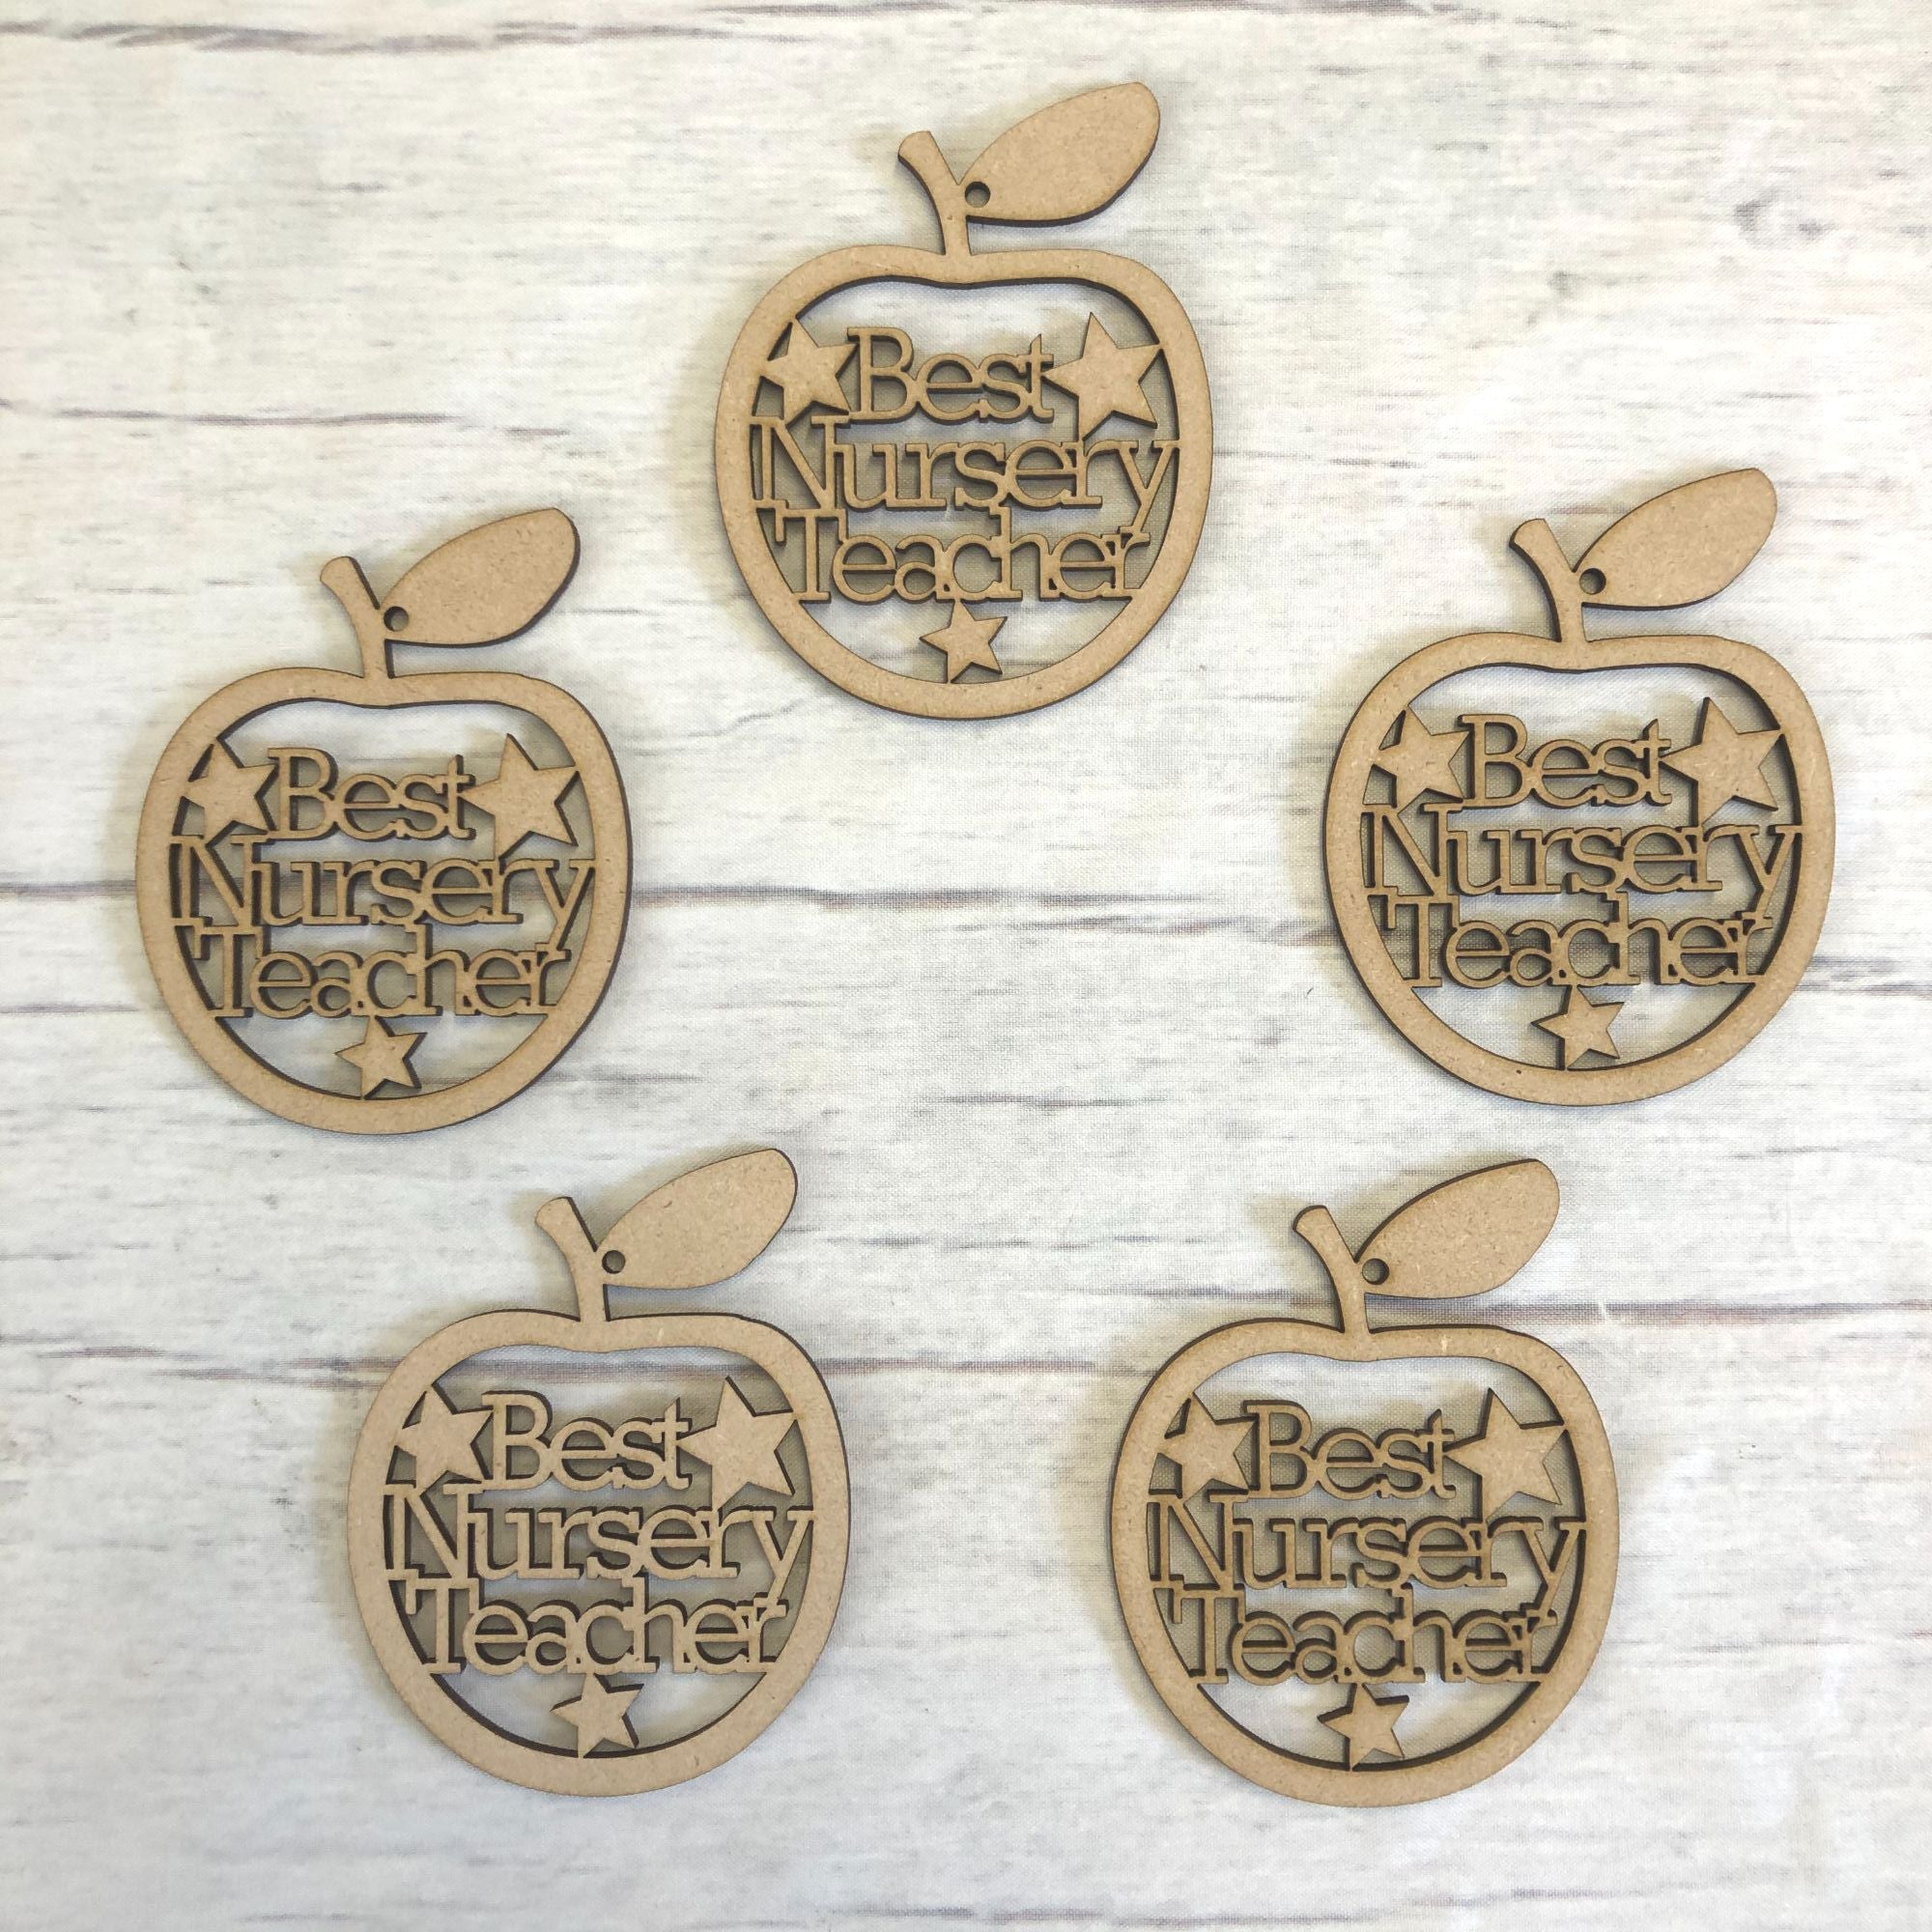 Base MDF - Best Nursery Teacher apple hangers - set of 5